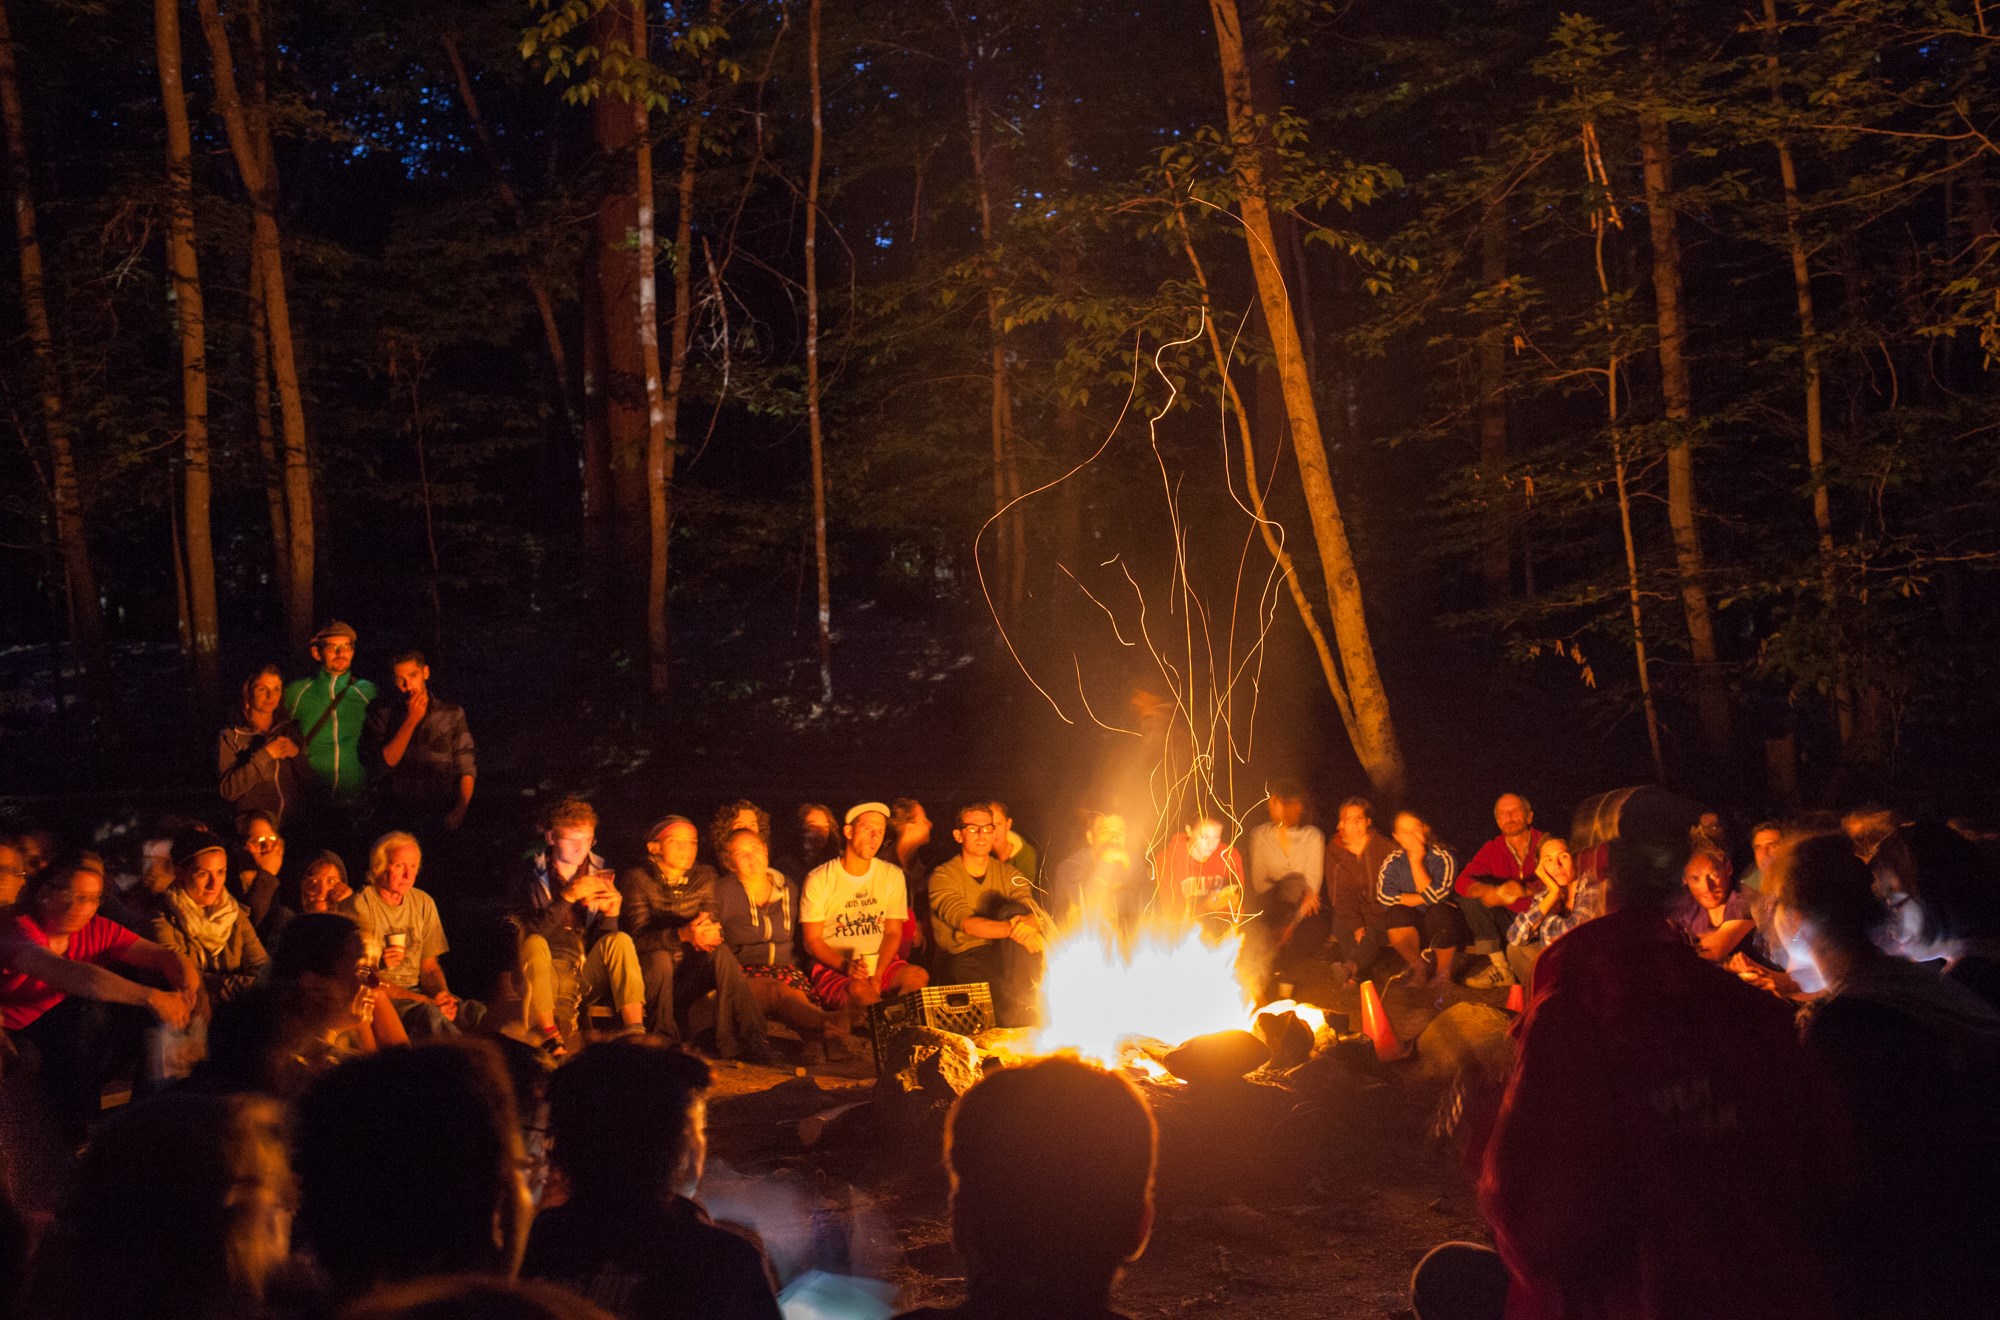 Singing classics at the campfire sing-along